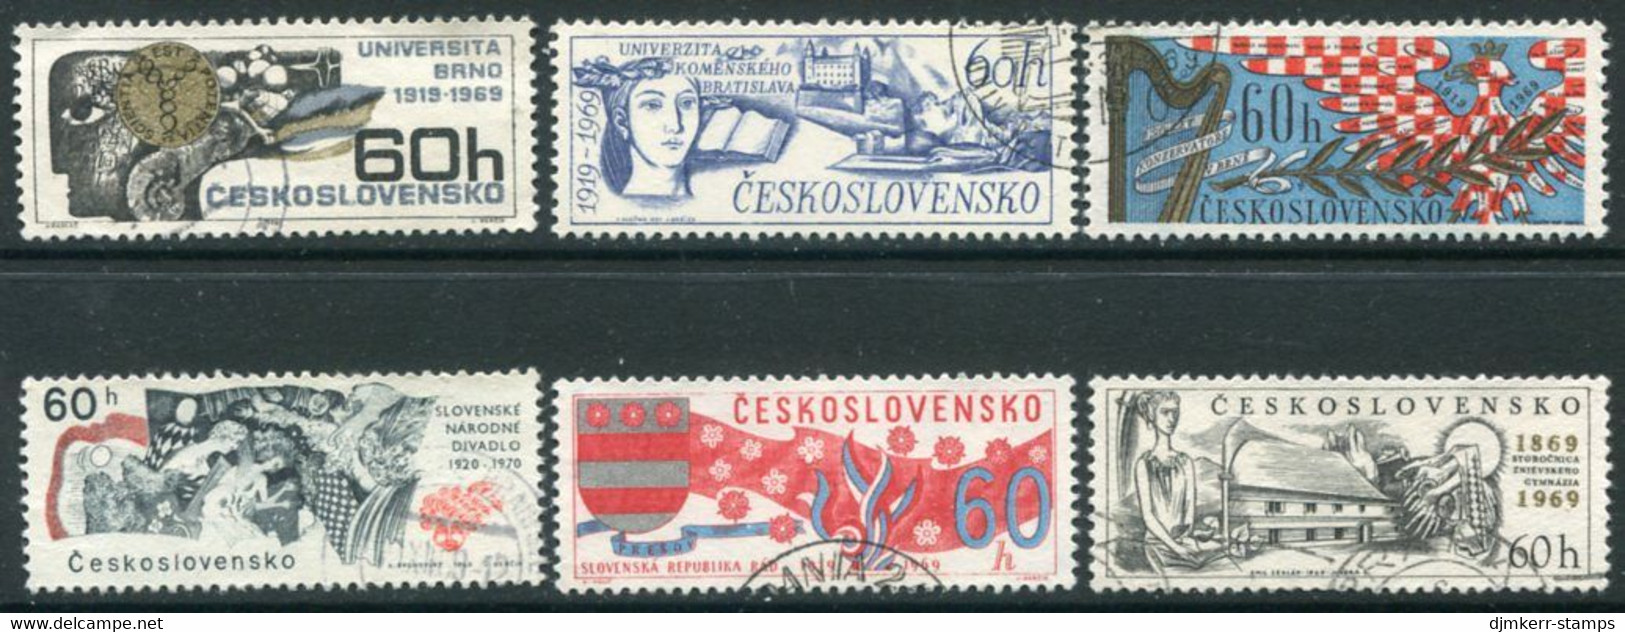 CZECHOSLOVAKIA 1969 Scientific And Cultural Anniversaries Used  Michel 1860-65 - Gebraucht